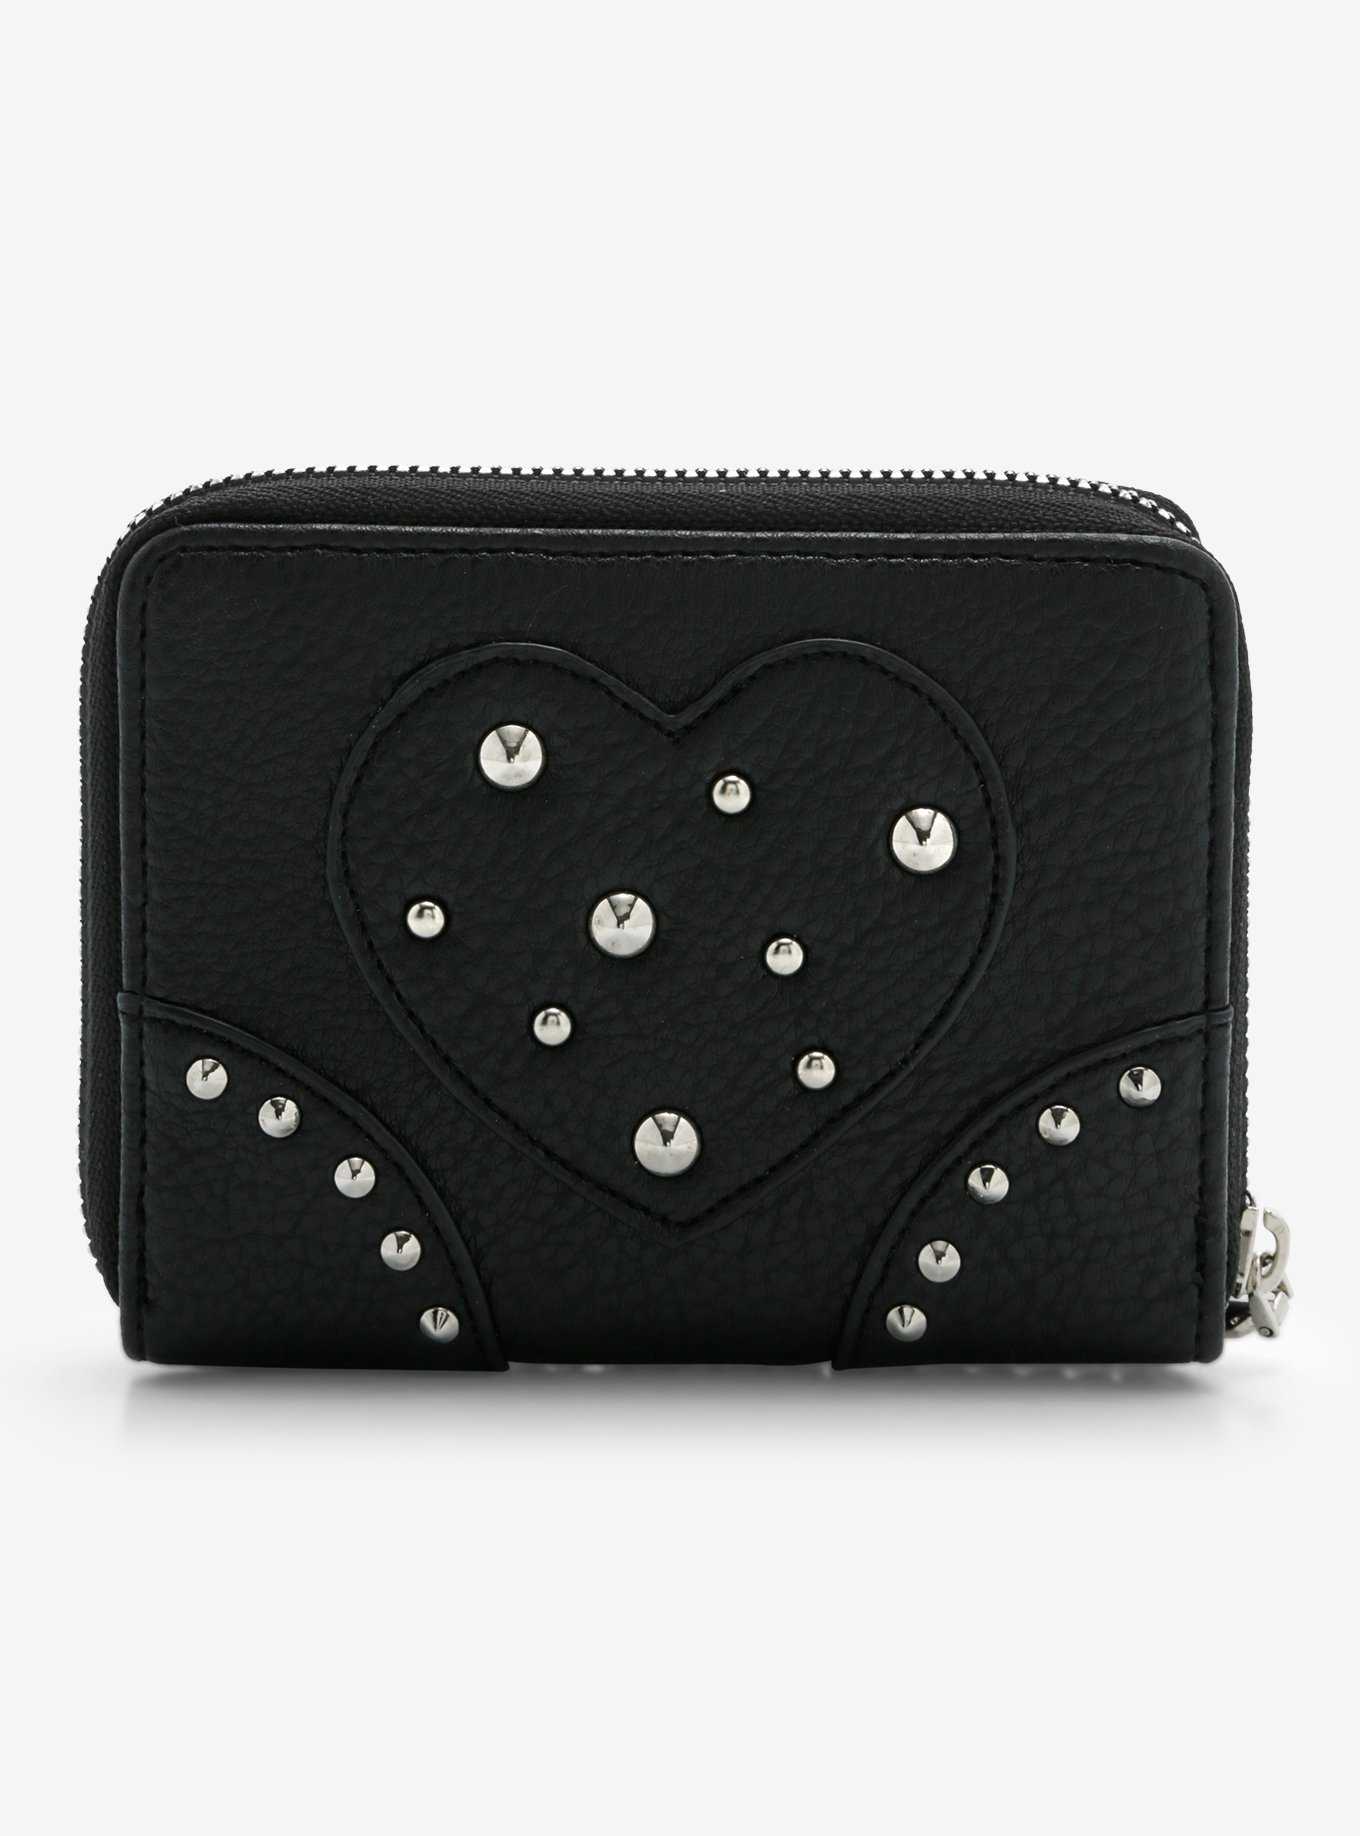 Black Faux Leather Hardware Mini Zipper Wallet, , hi-res